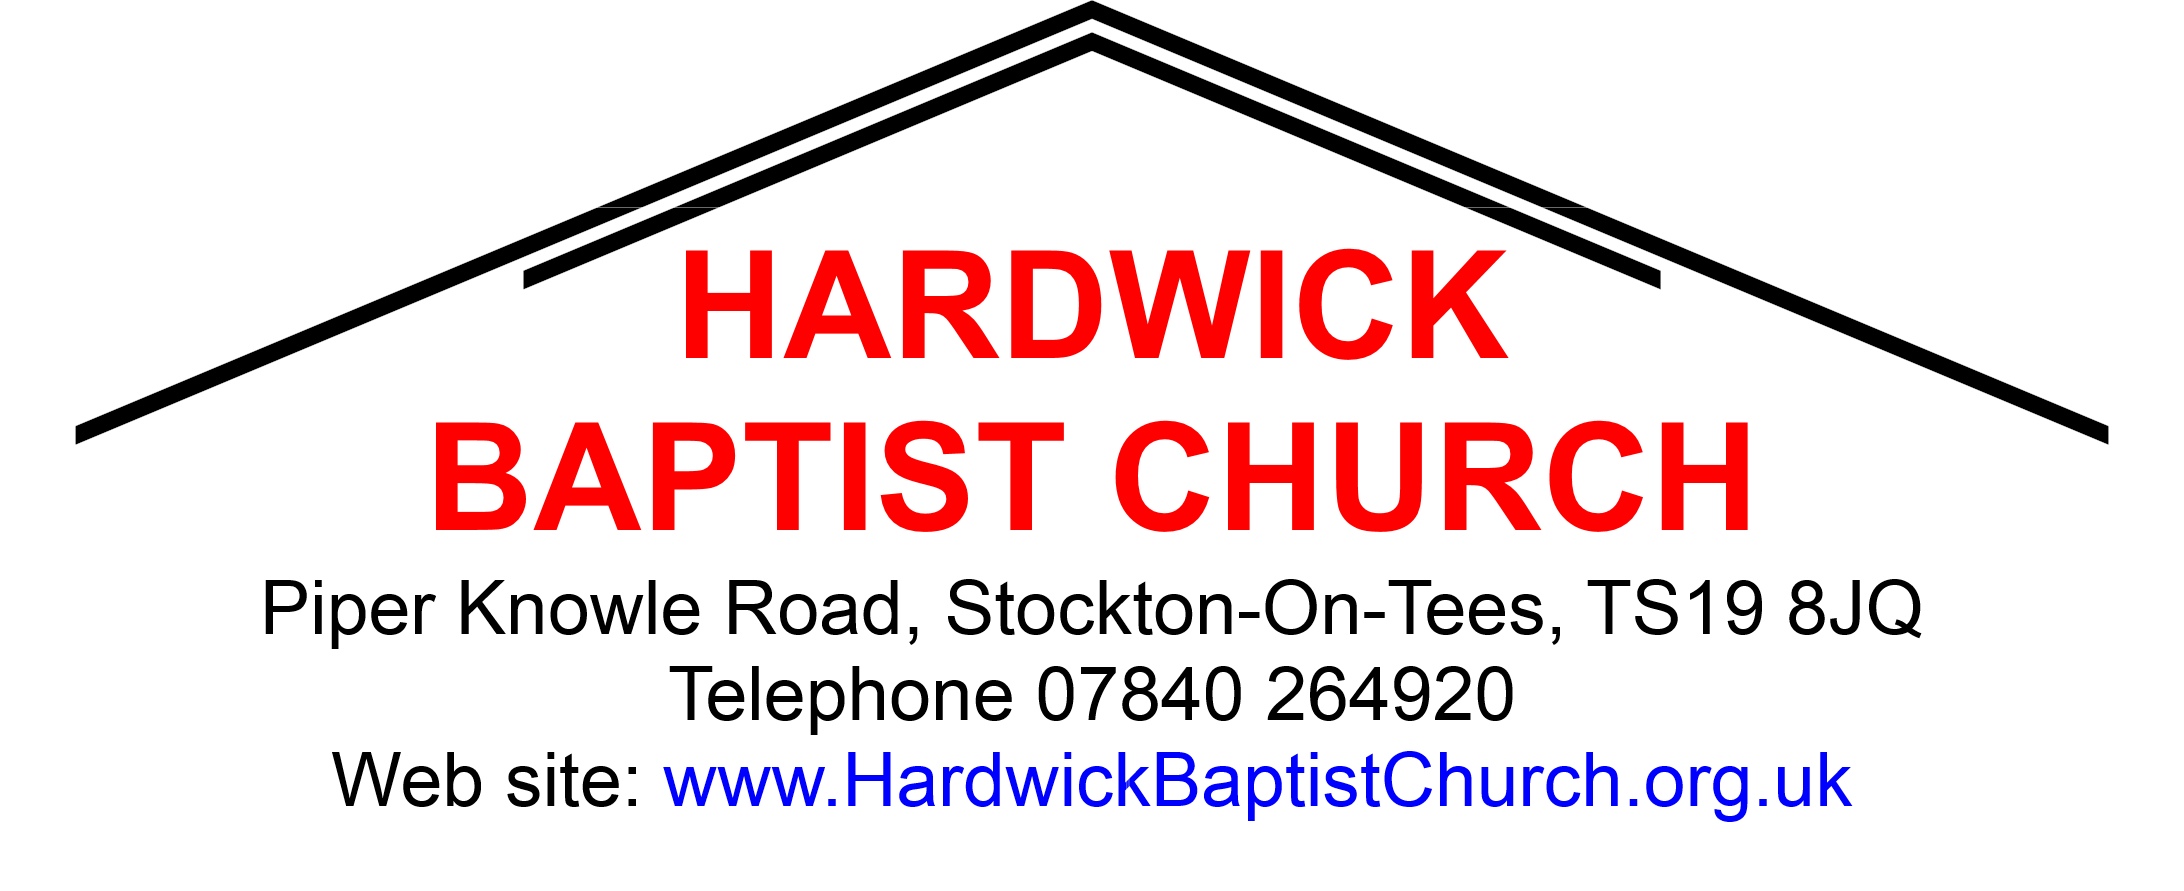 Hardwick Baptist Church